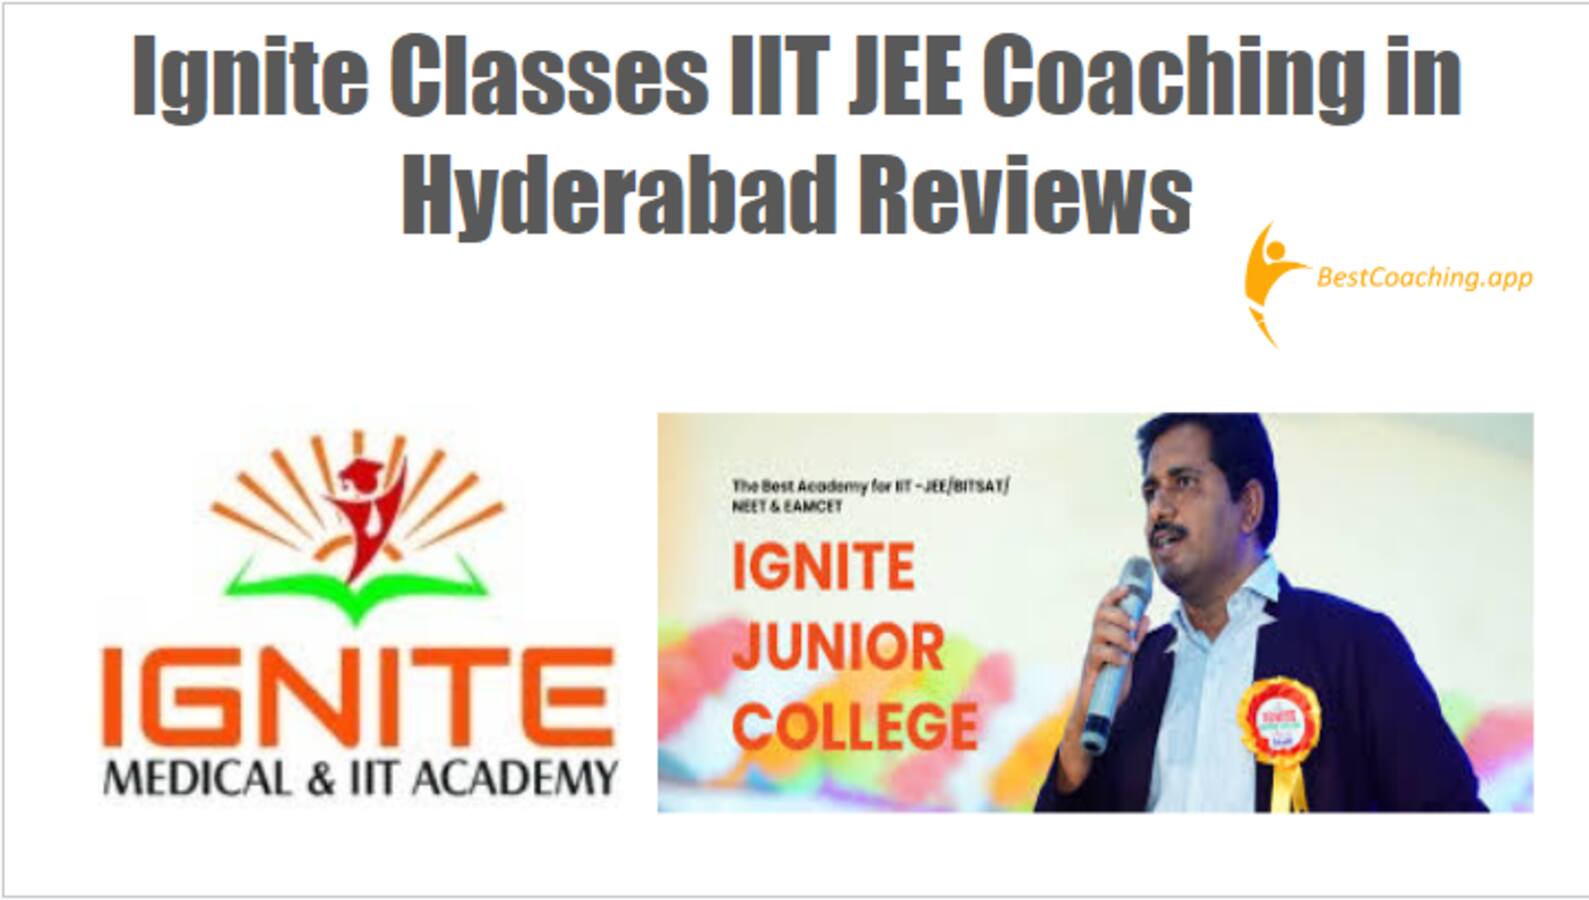 Ignite Classes IIT JEE Coaching in Hyderabad